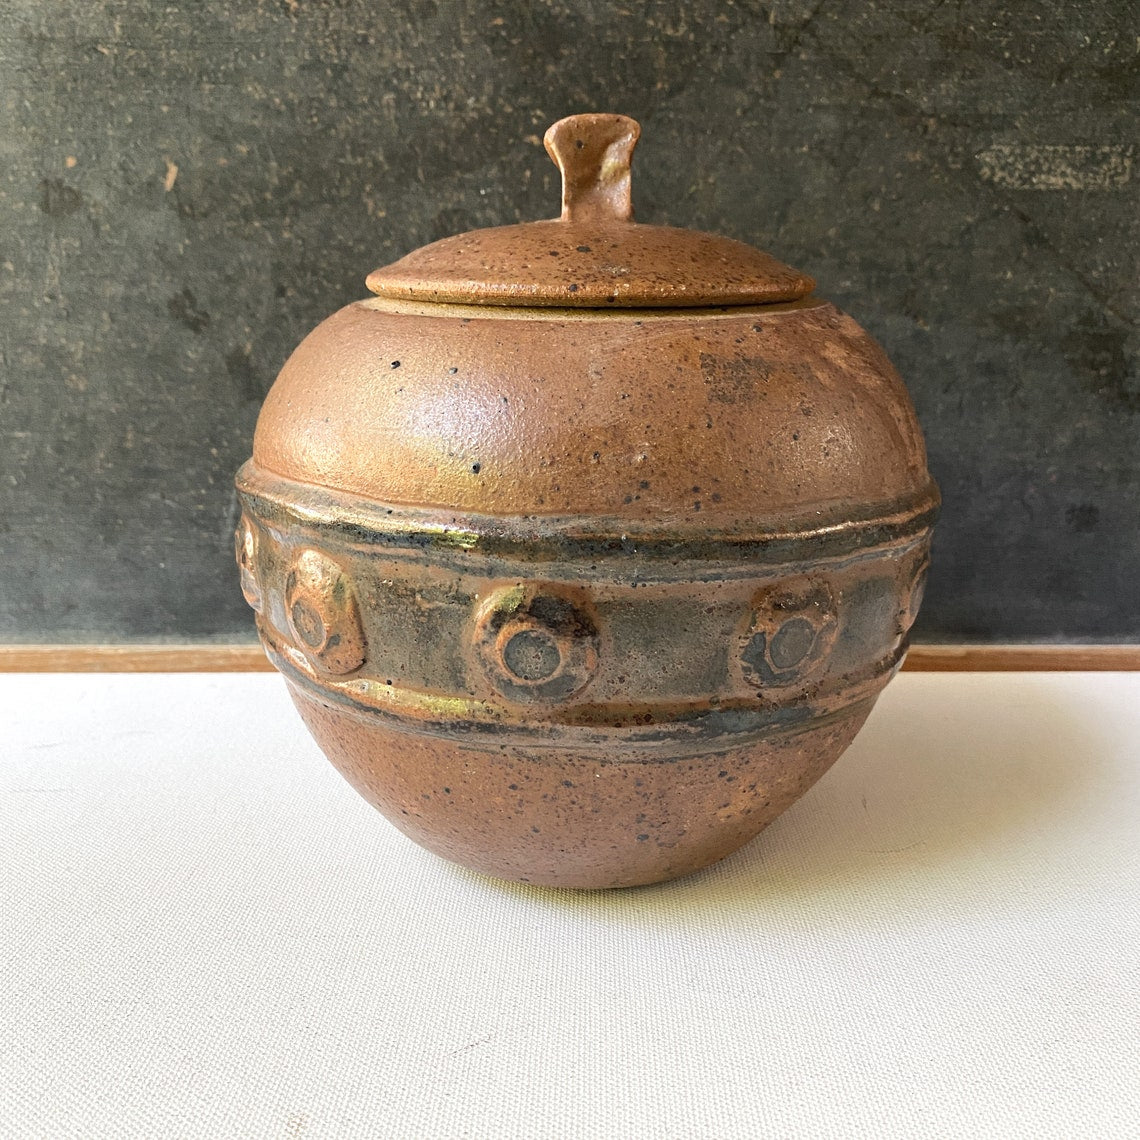 Vintage Studio Pottery Lidded Jar, Midcentury Stoneware, Artisan Handmade by Smart, Rustic Decor, 70s